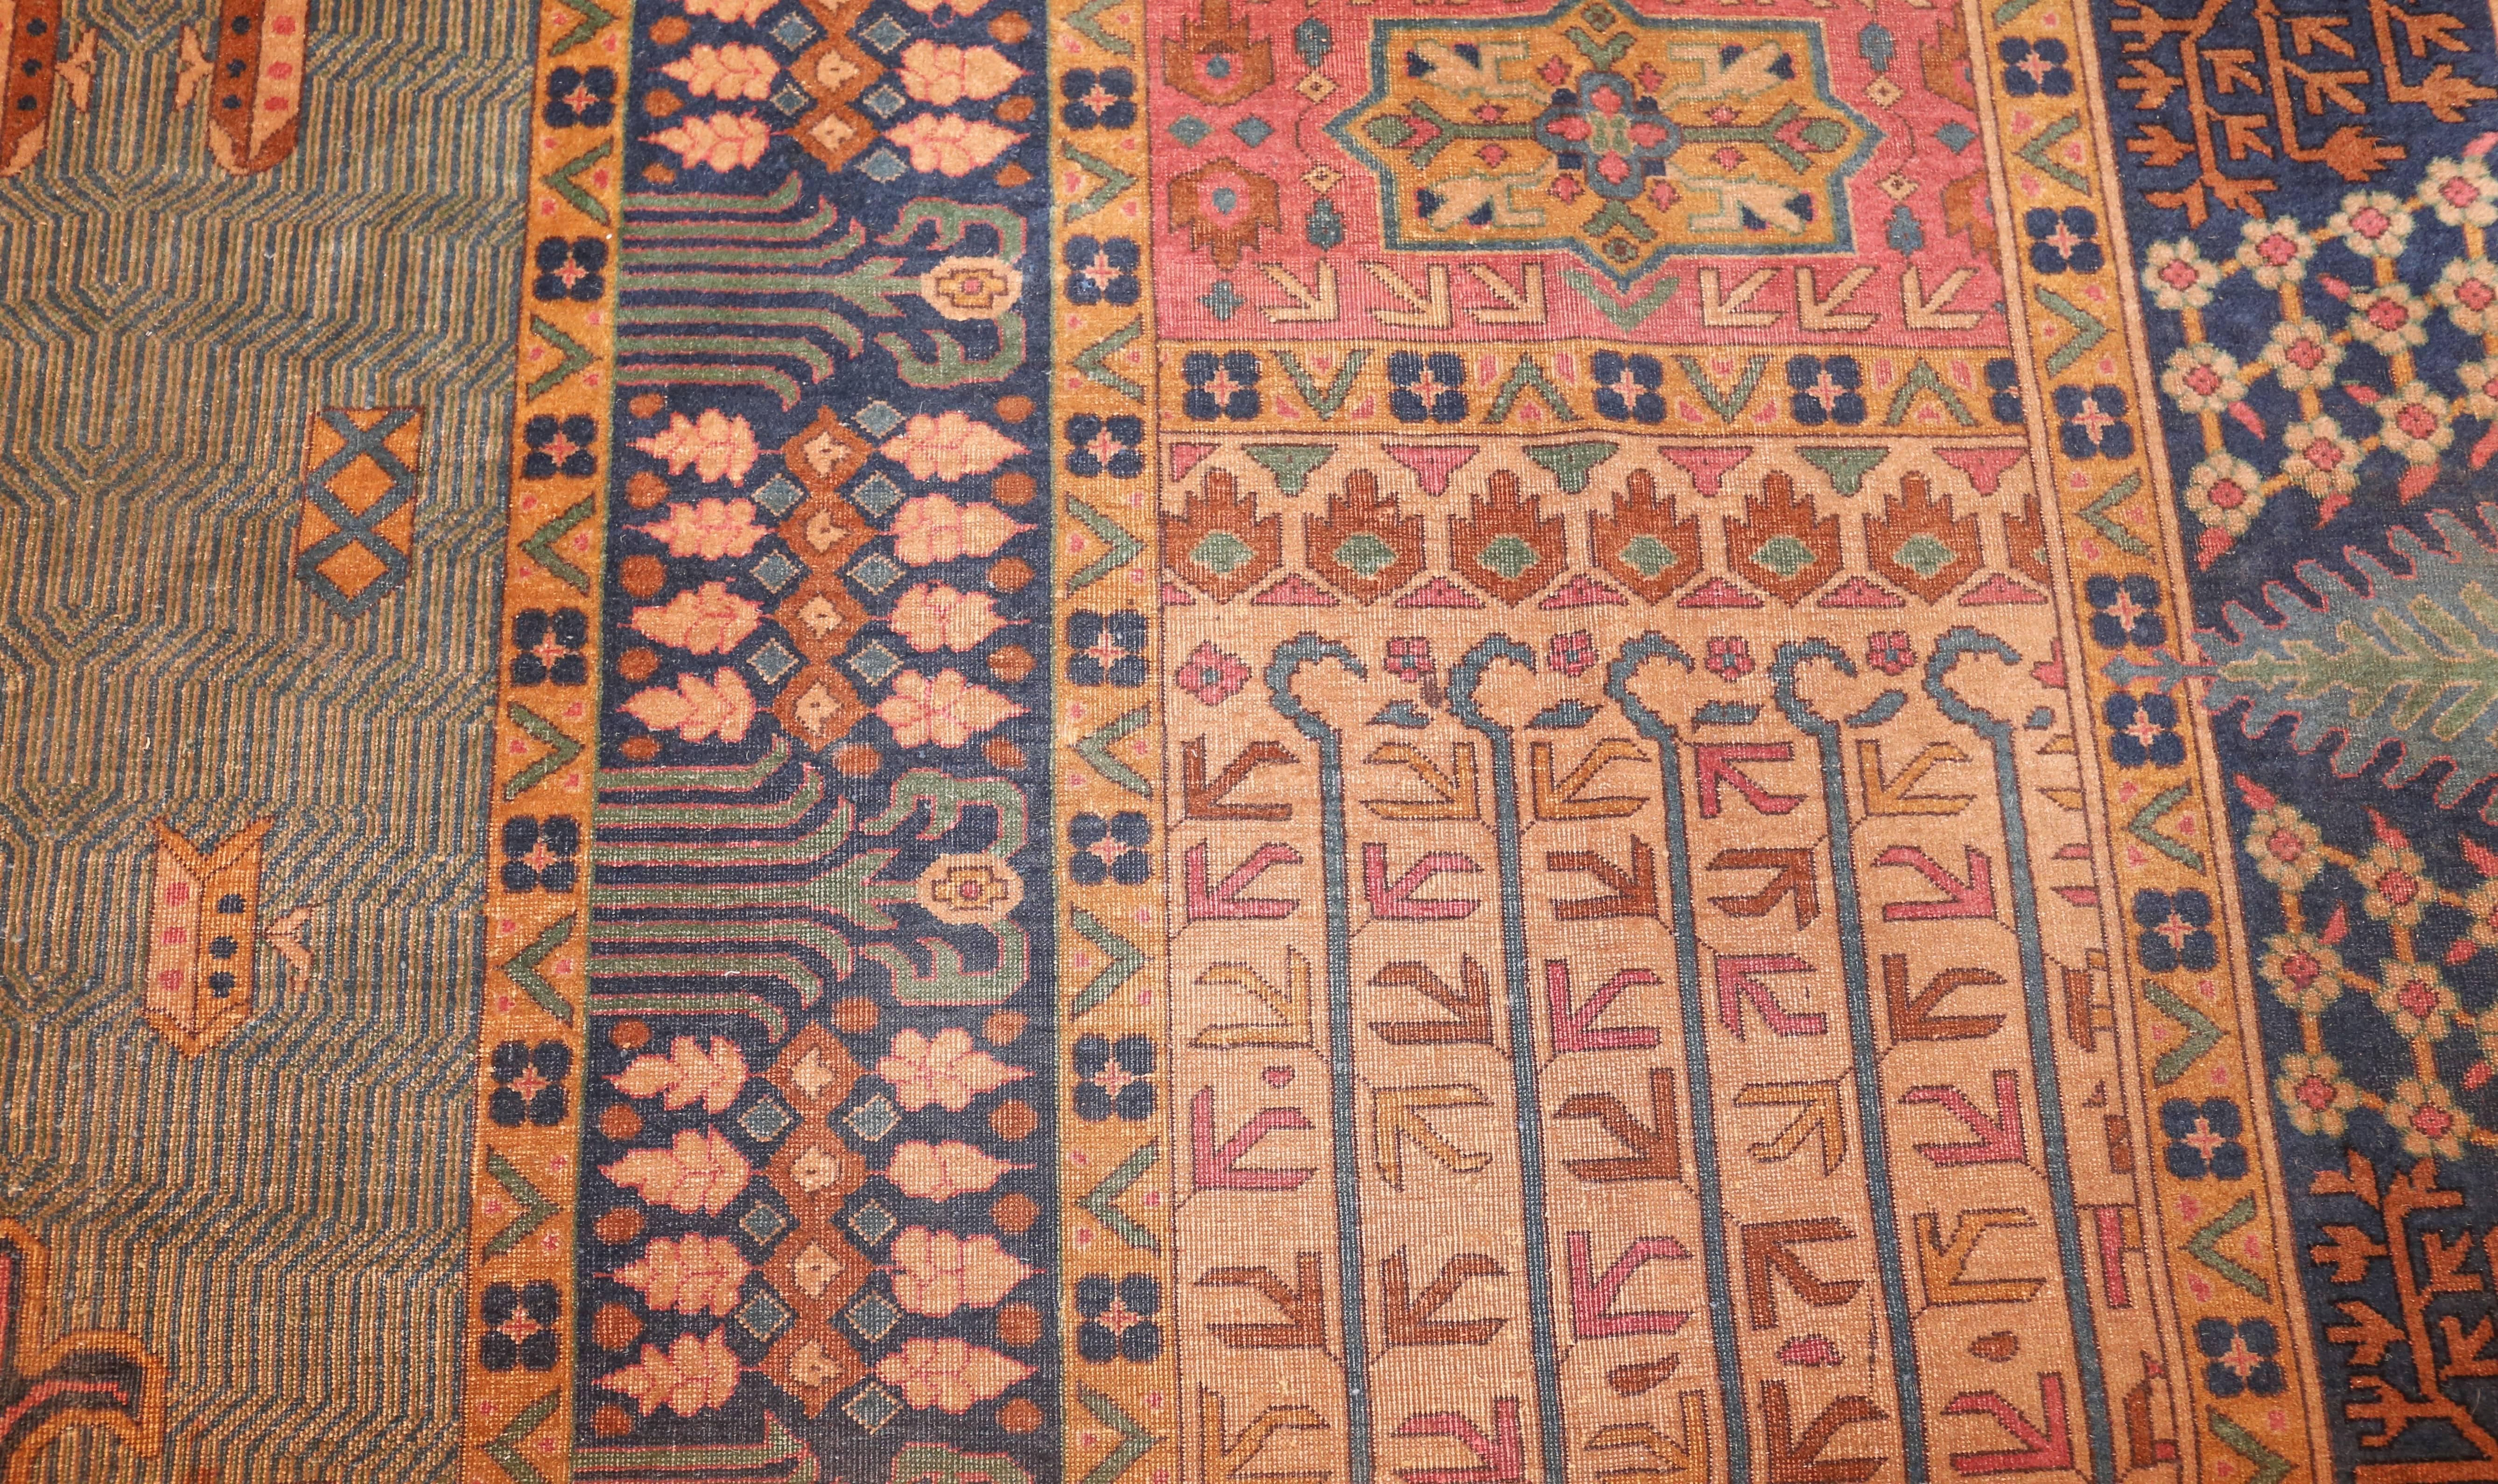 Art Deco Room-Sized Antique Indian Carpet